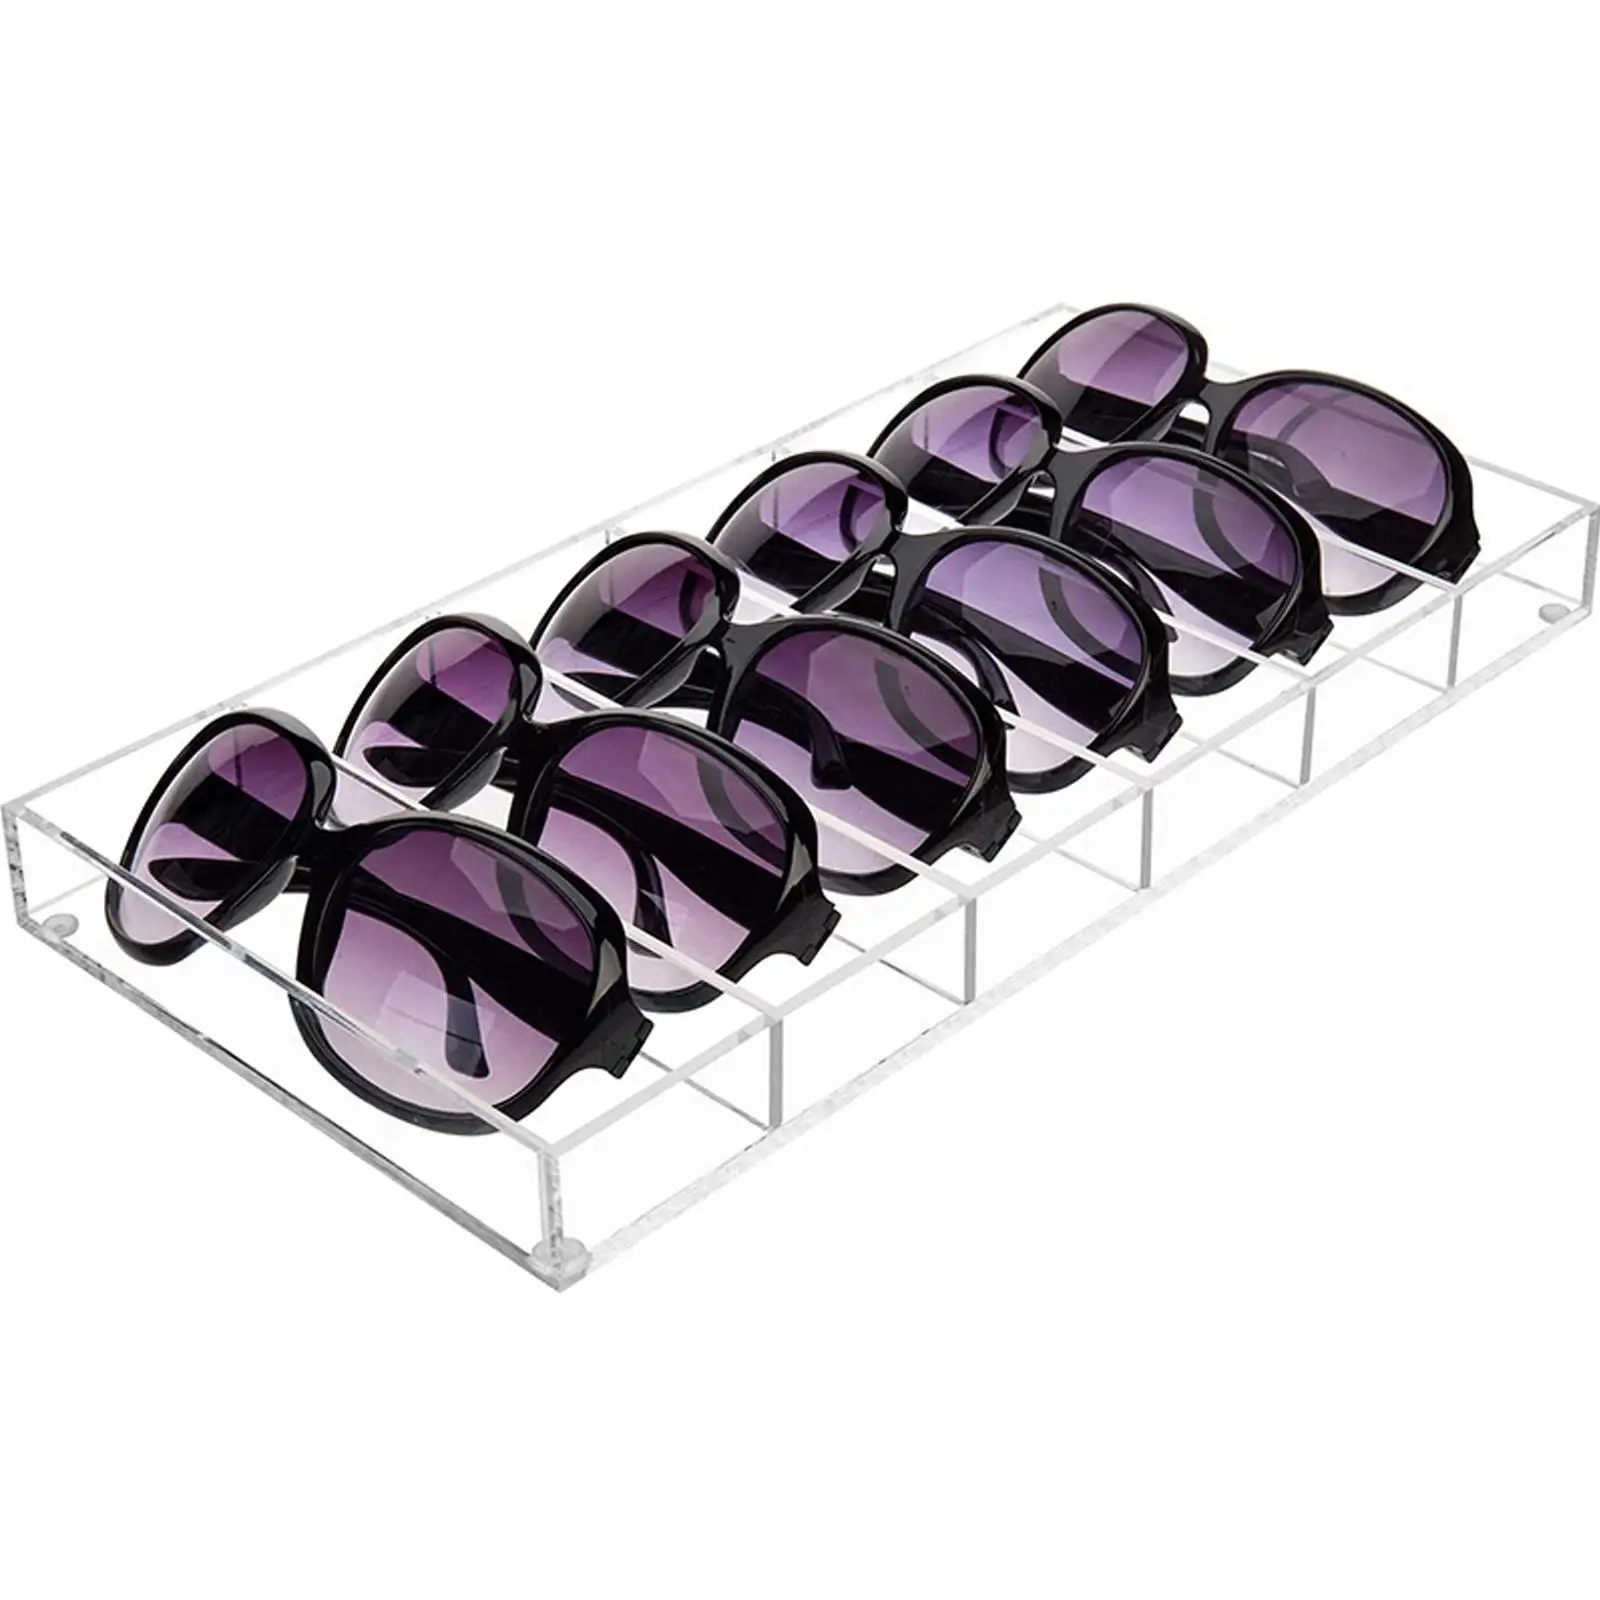 Acrylic Glasses Organizer 6 Slot Clear Eyewear Storage Tray Glasses Holder Stand Shelf for Watch Jewelry Makeup Display Showcase